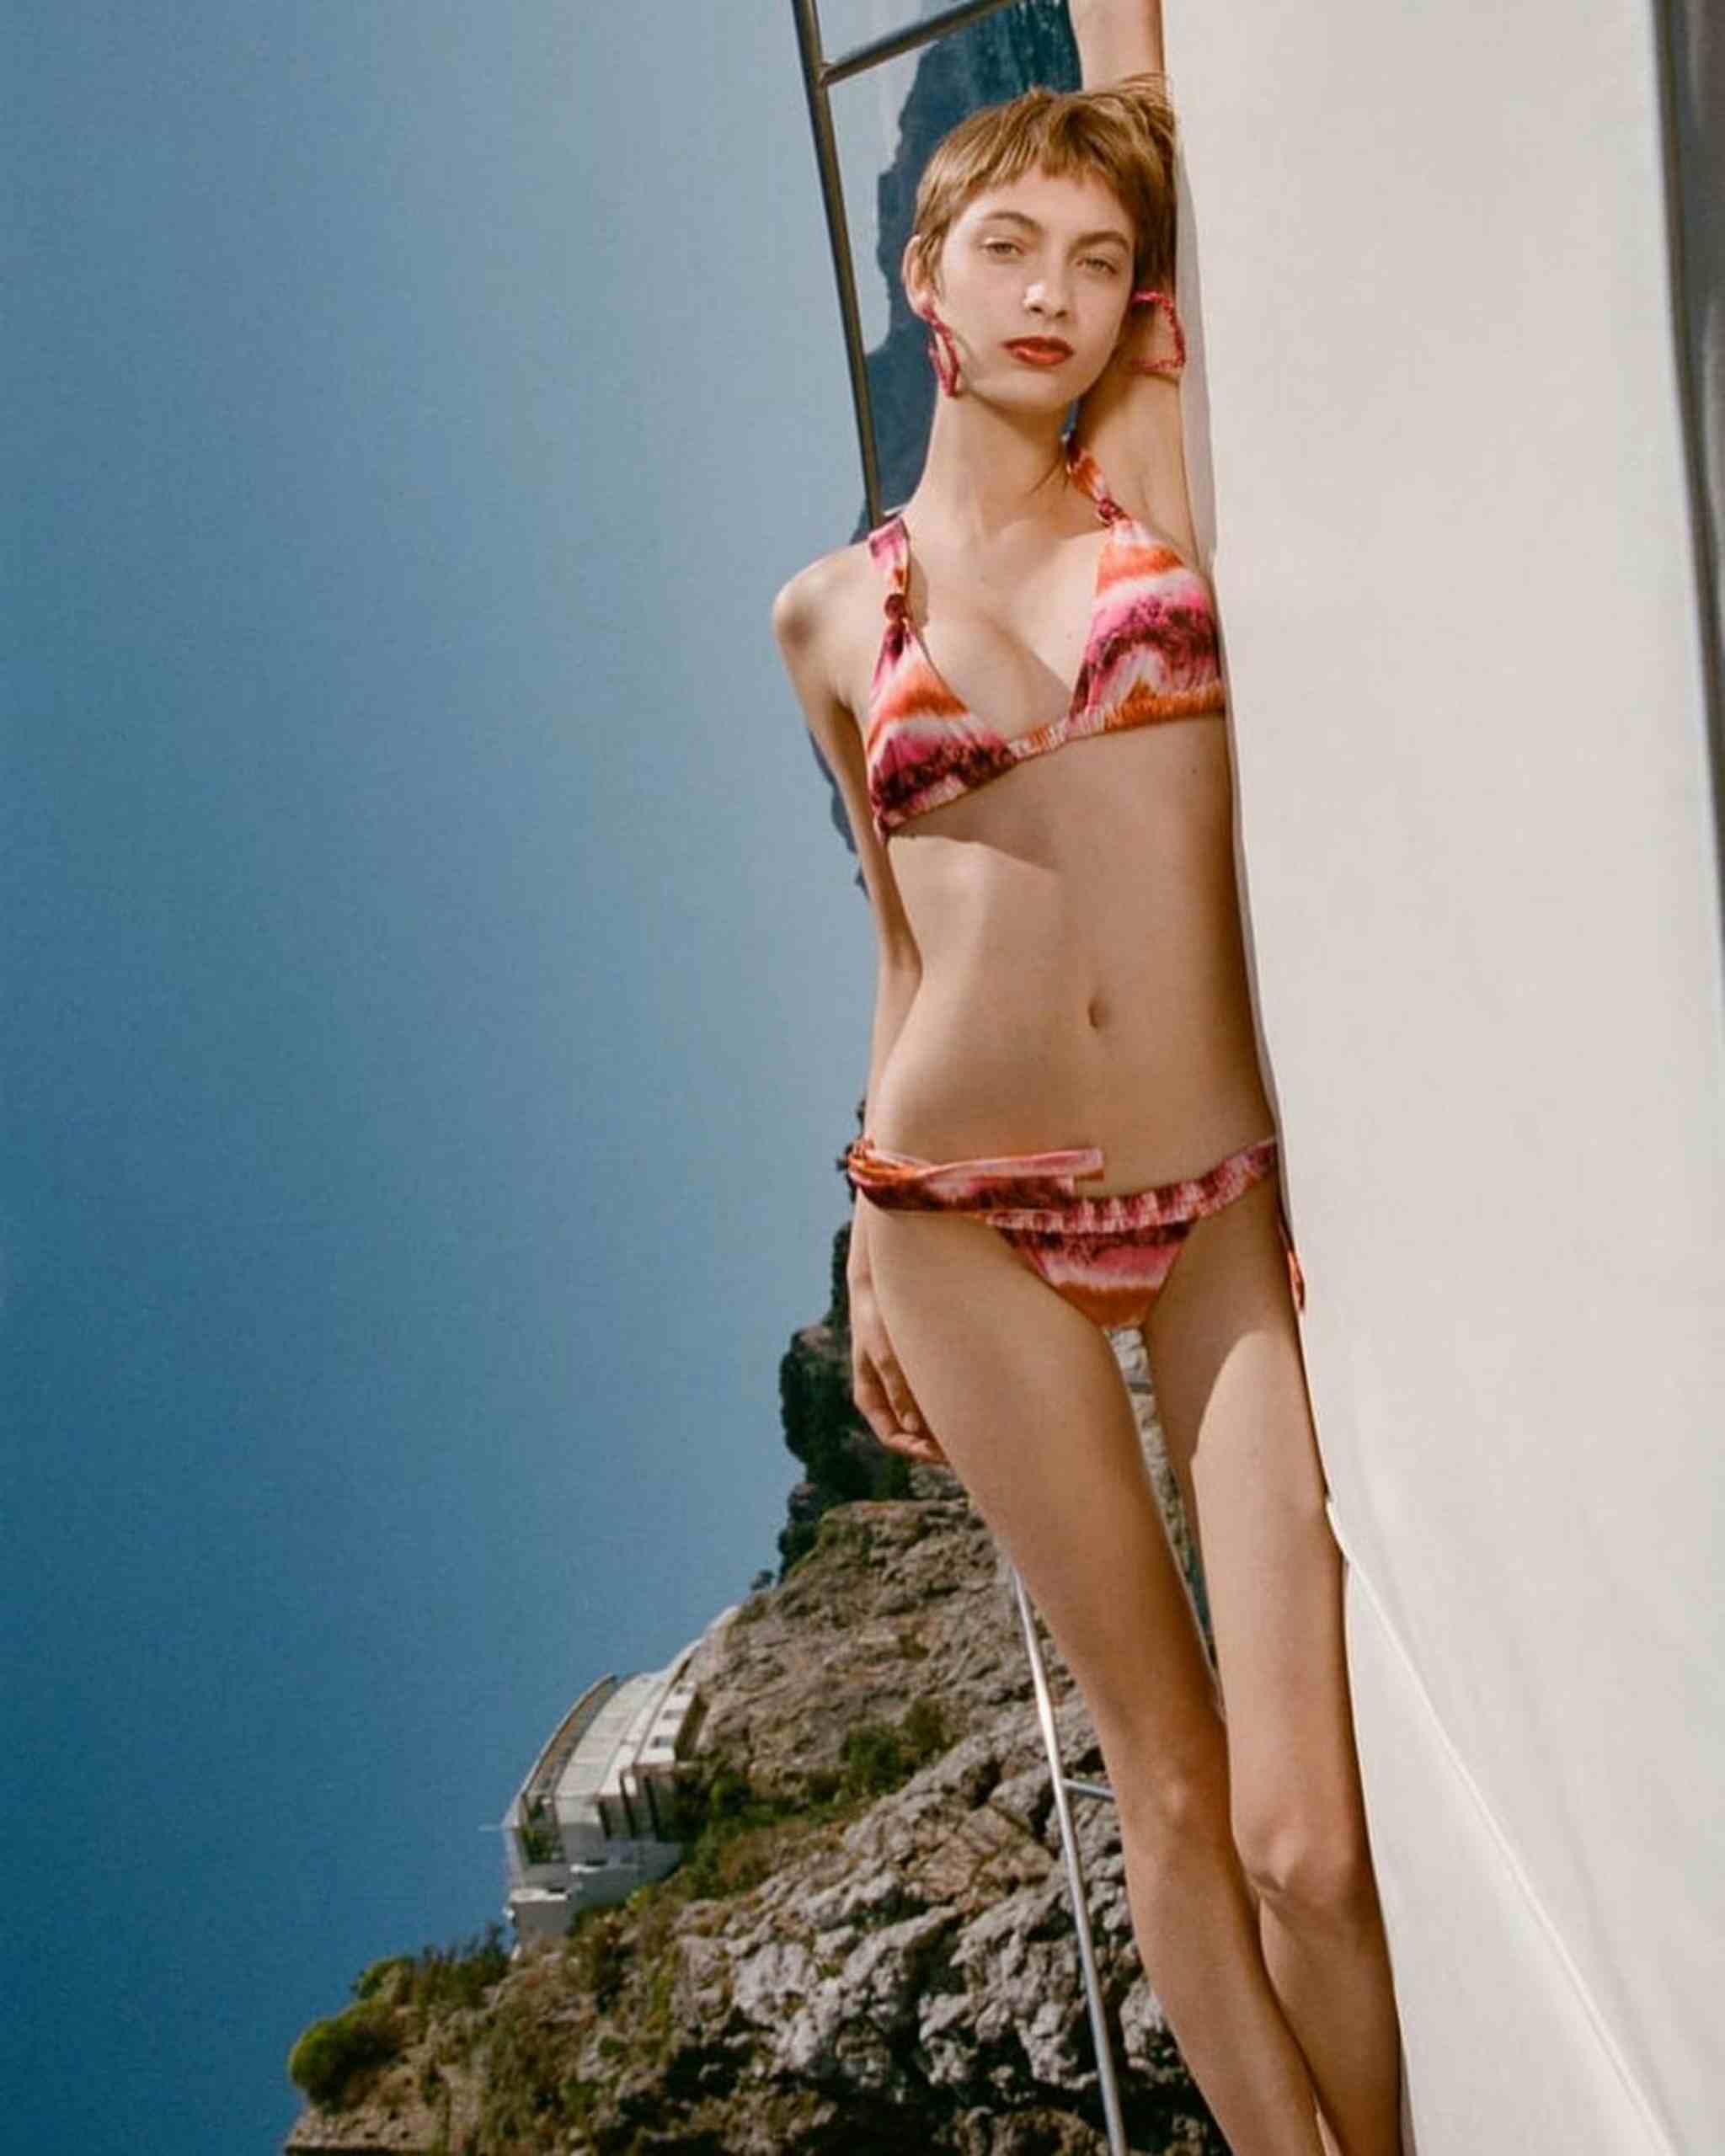 ZARA - Swimsuit Campaign '23
Photographer: Bibi Borthwick
